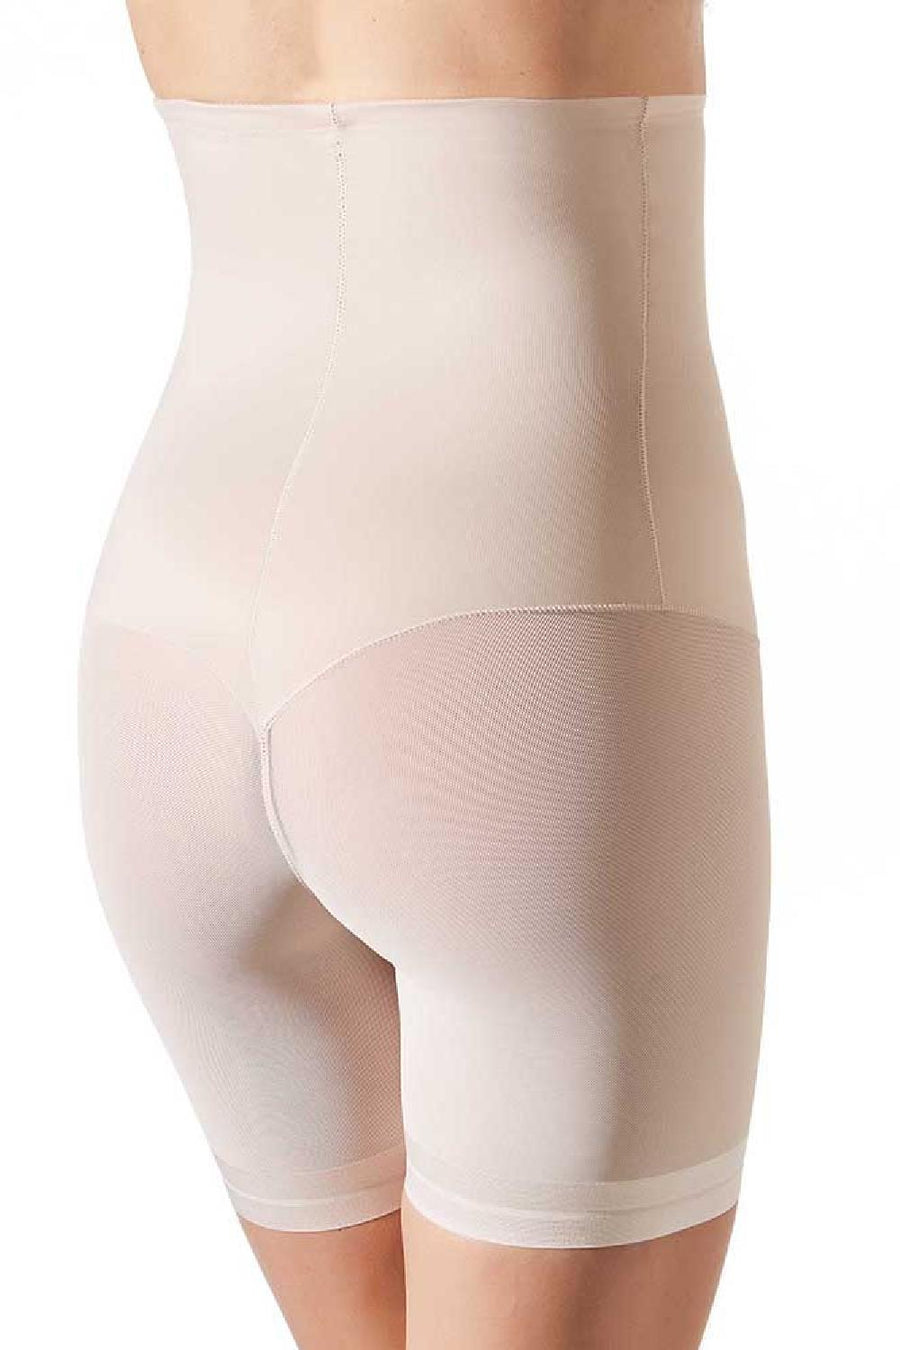 Delimira Women's Seamless Plus Size High Waist Control Panties